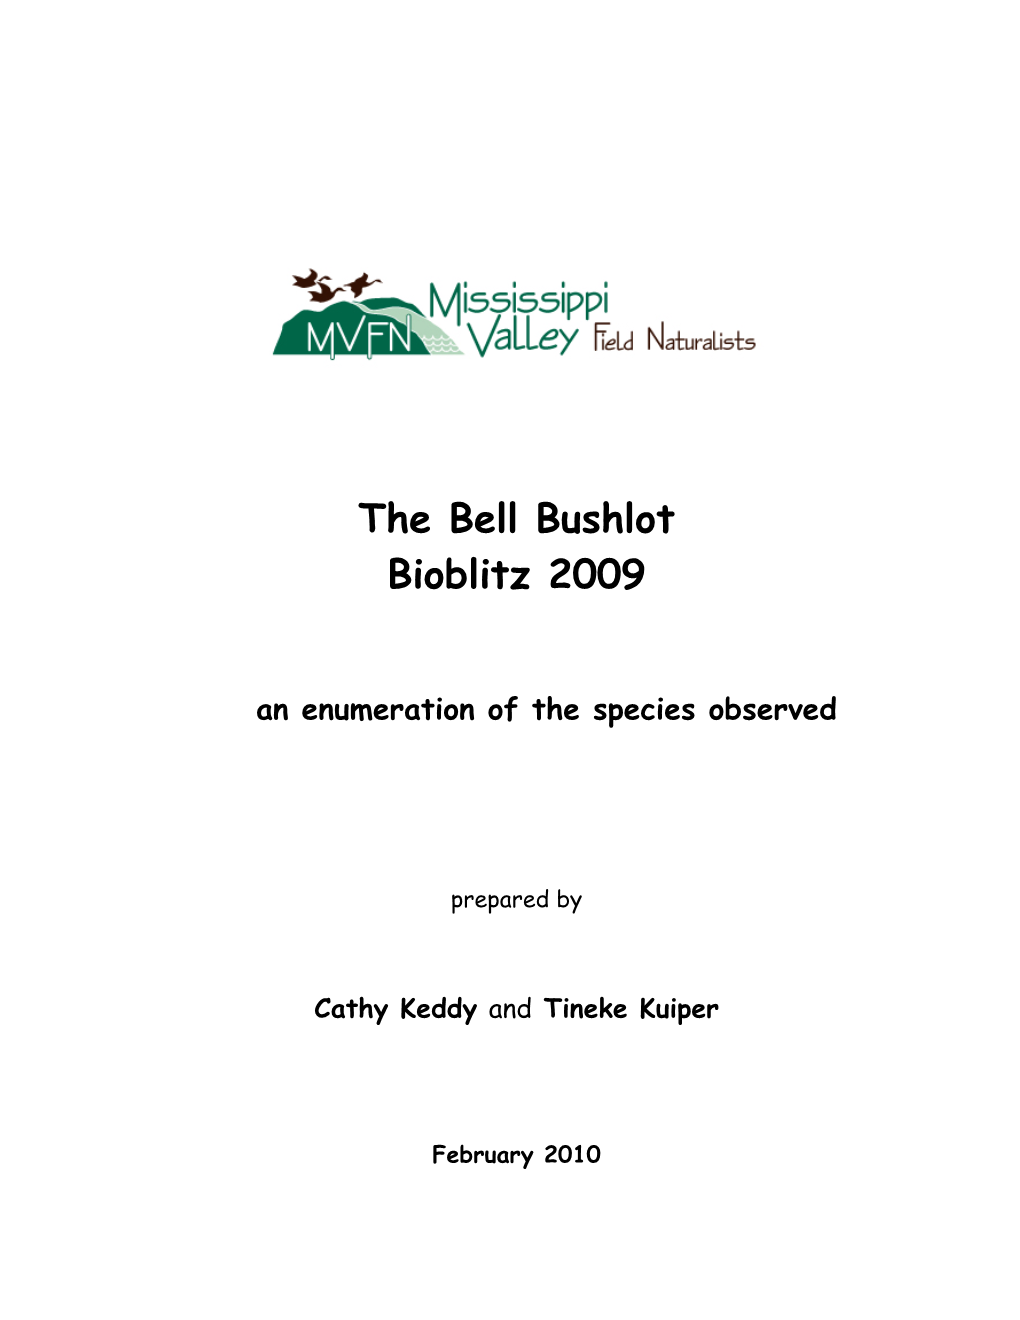 The Bell Bushlot Bioblitz 2009